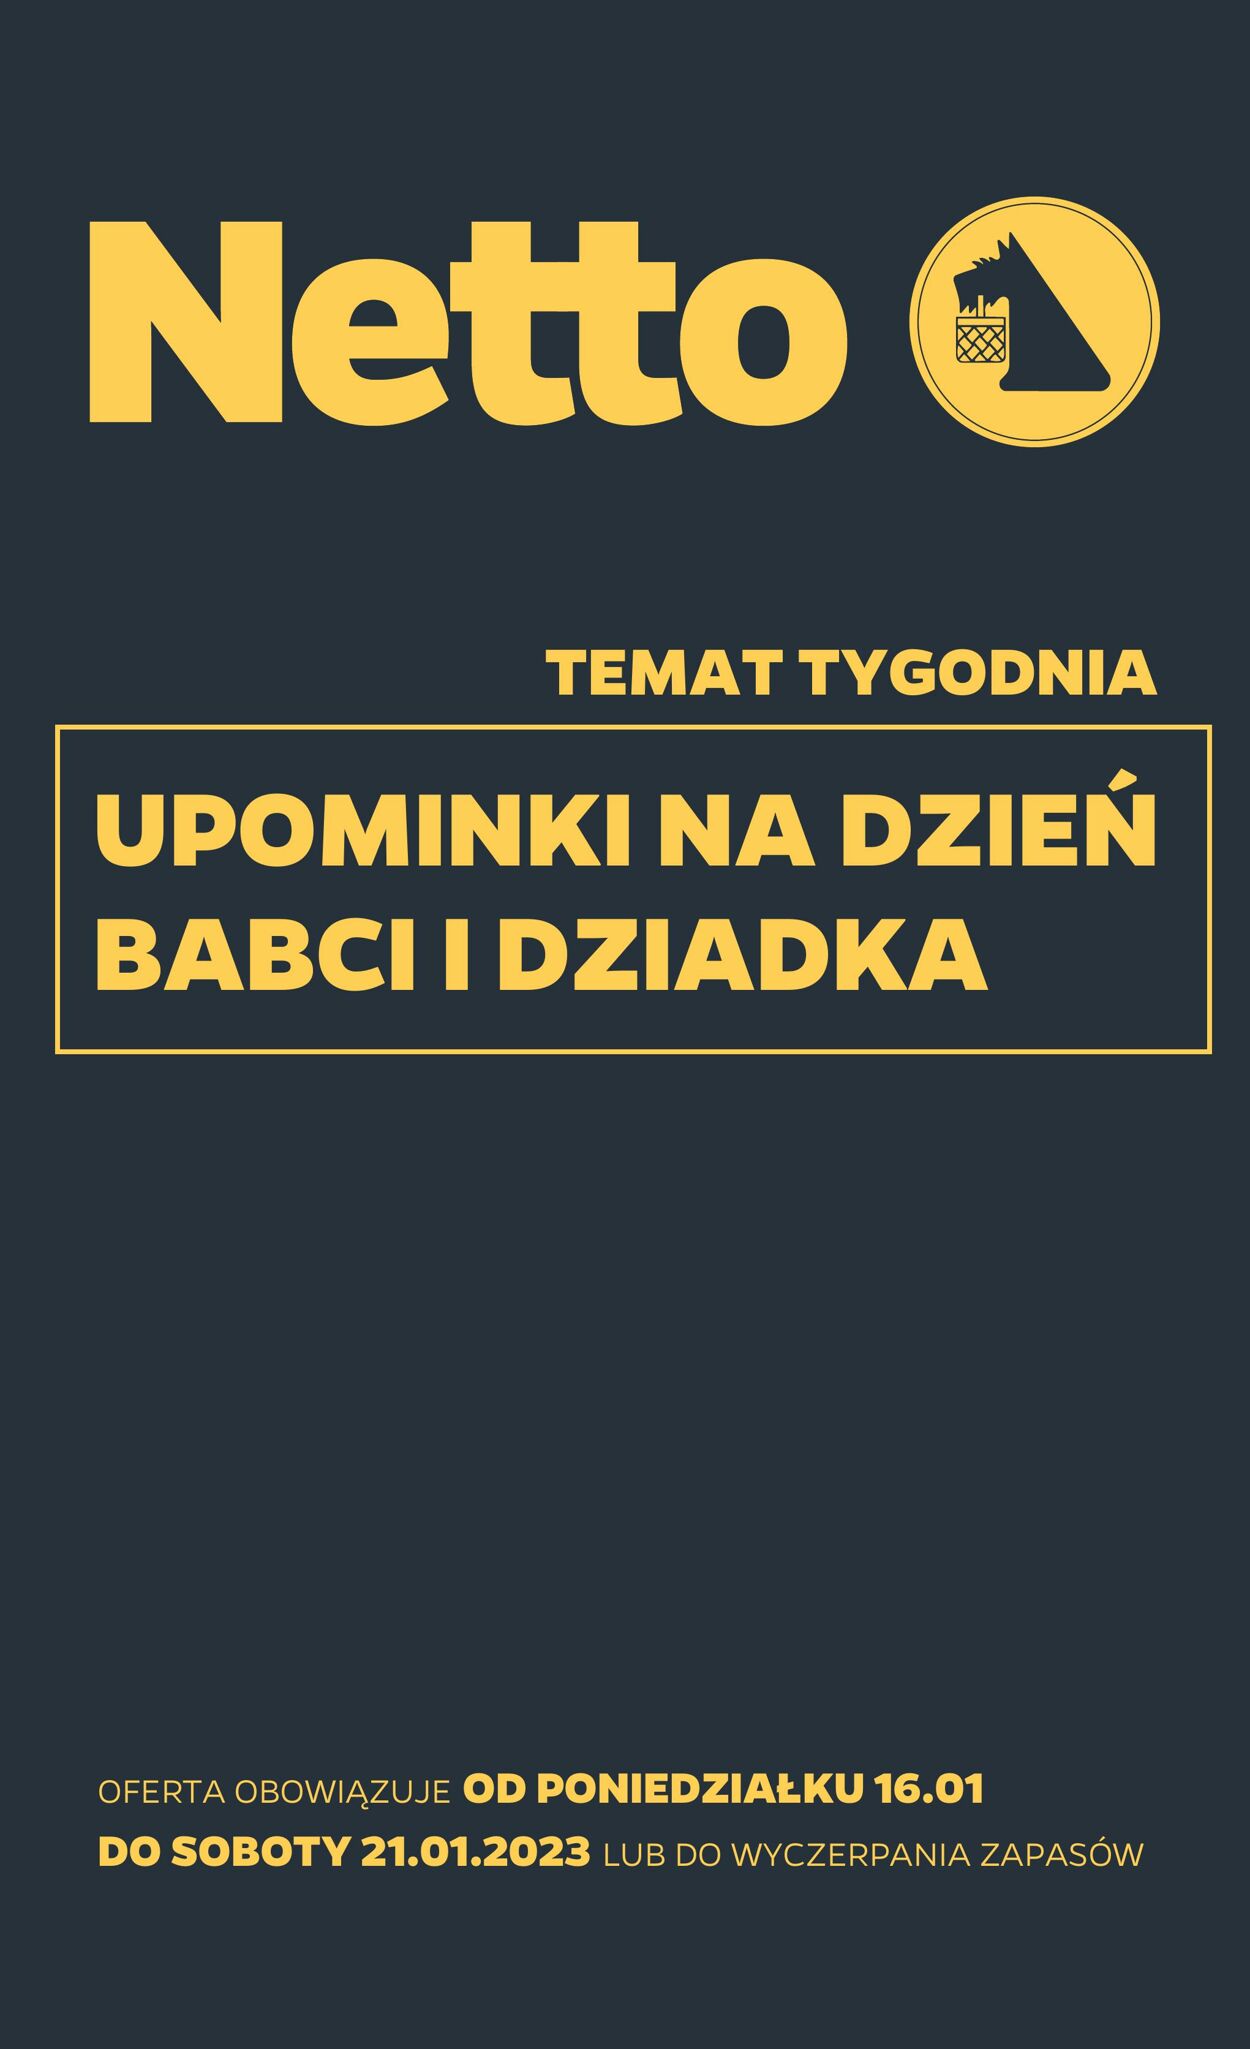 Gazetka Netto 16.01.2023 - 21.01.2023